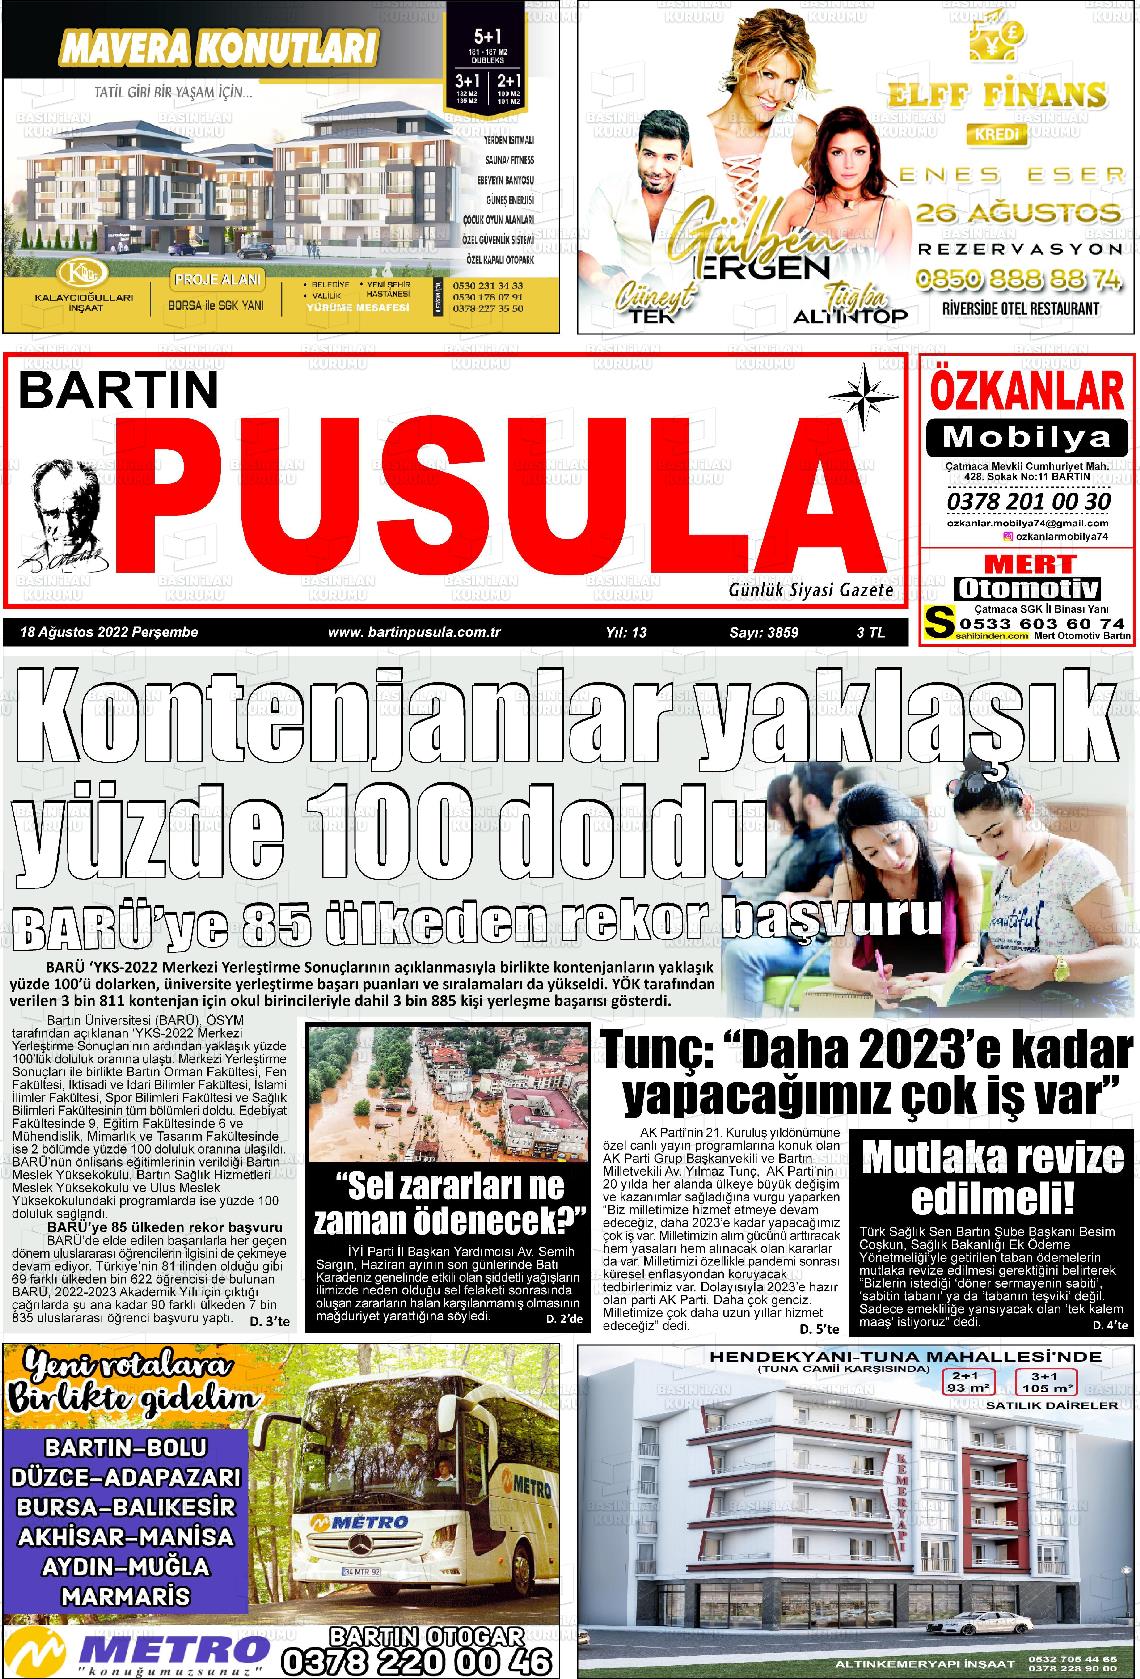 18 Ağustos 2022 Bartın Pusula Gazete Manşeti